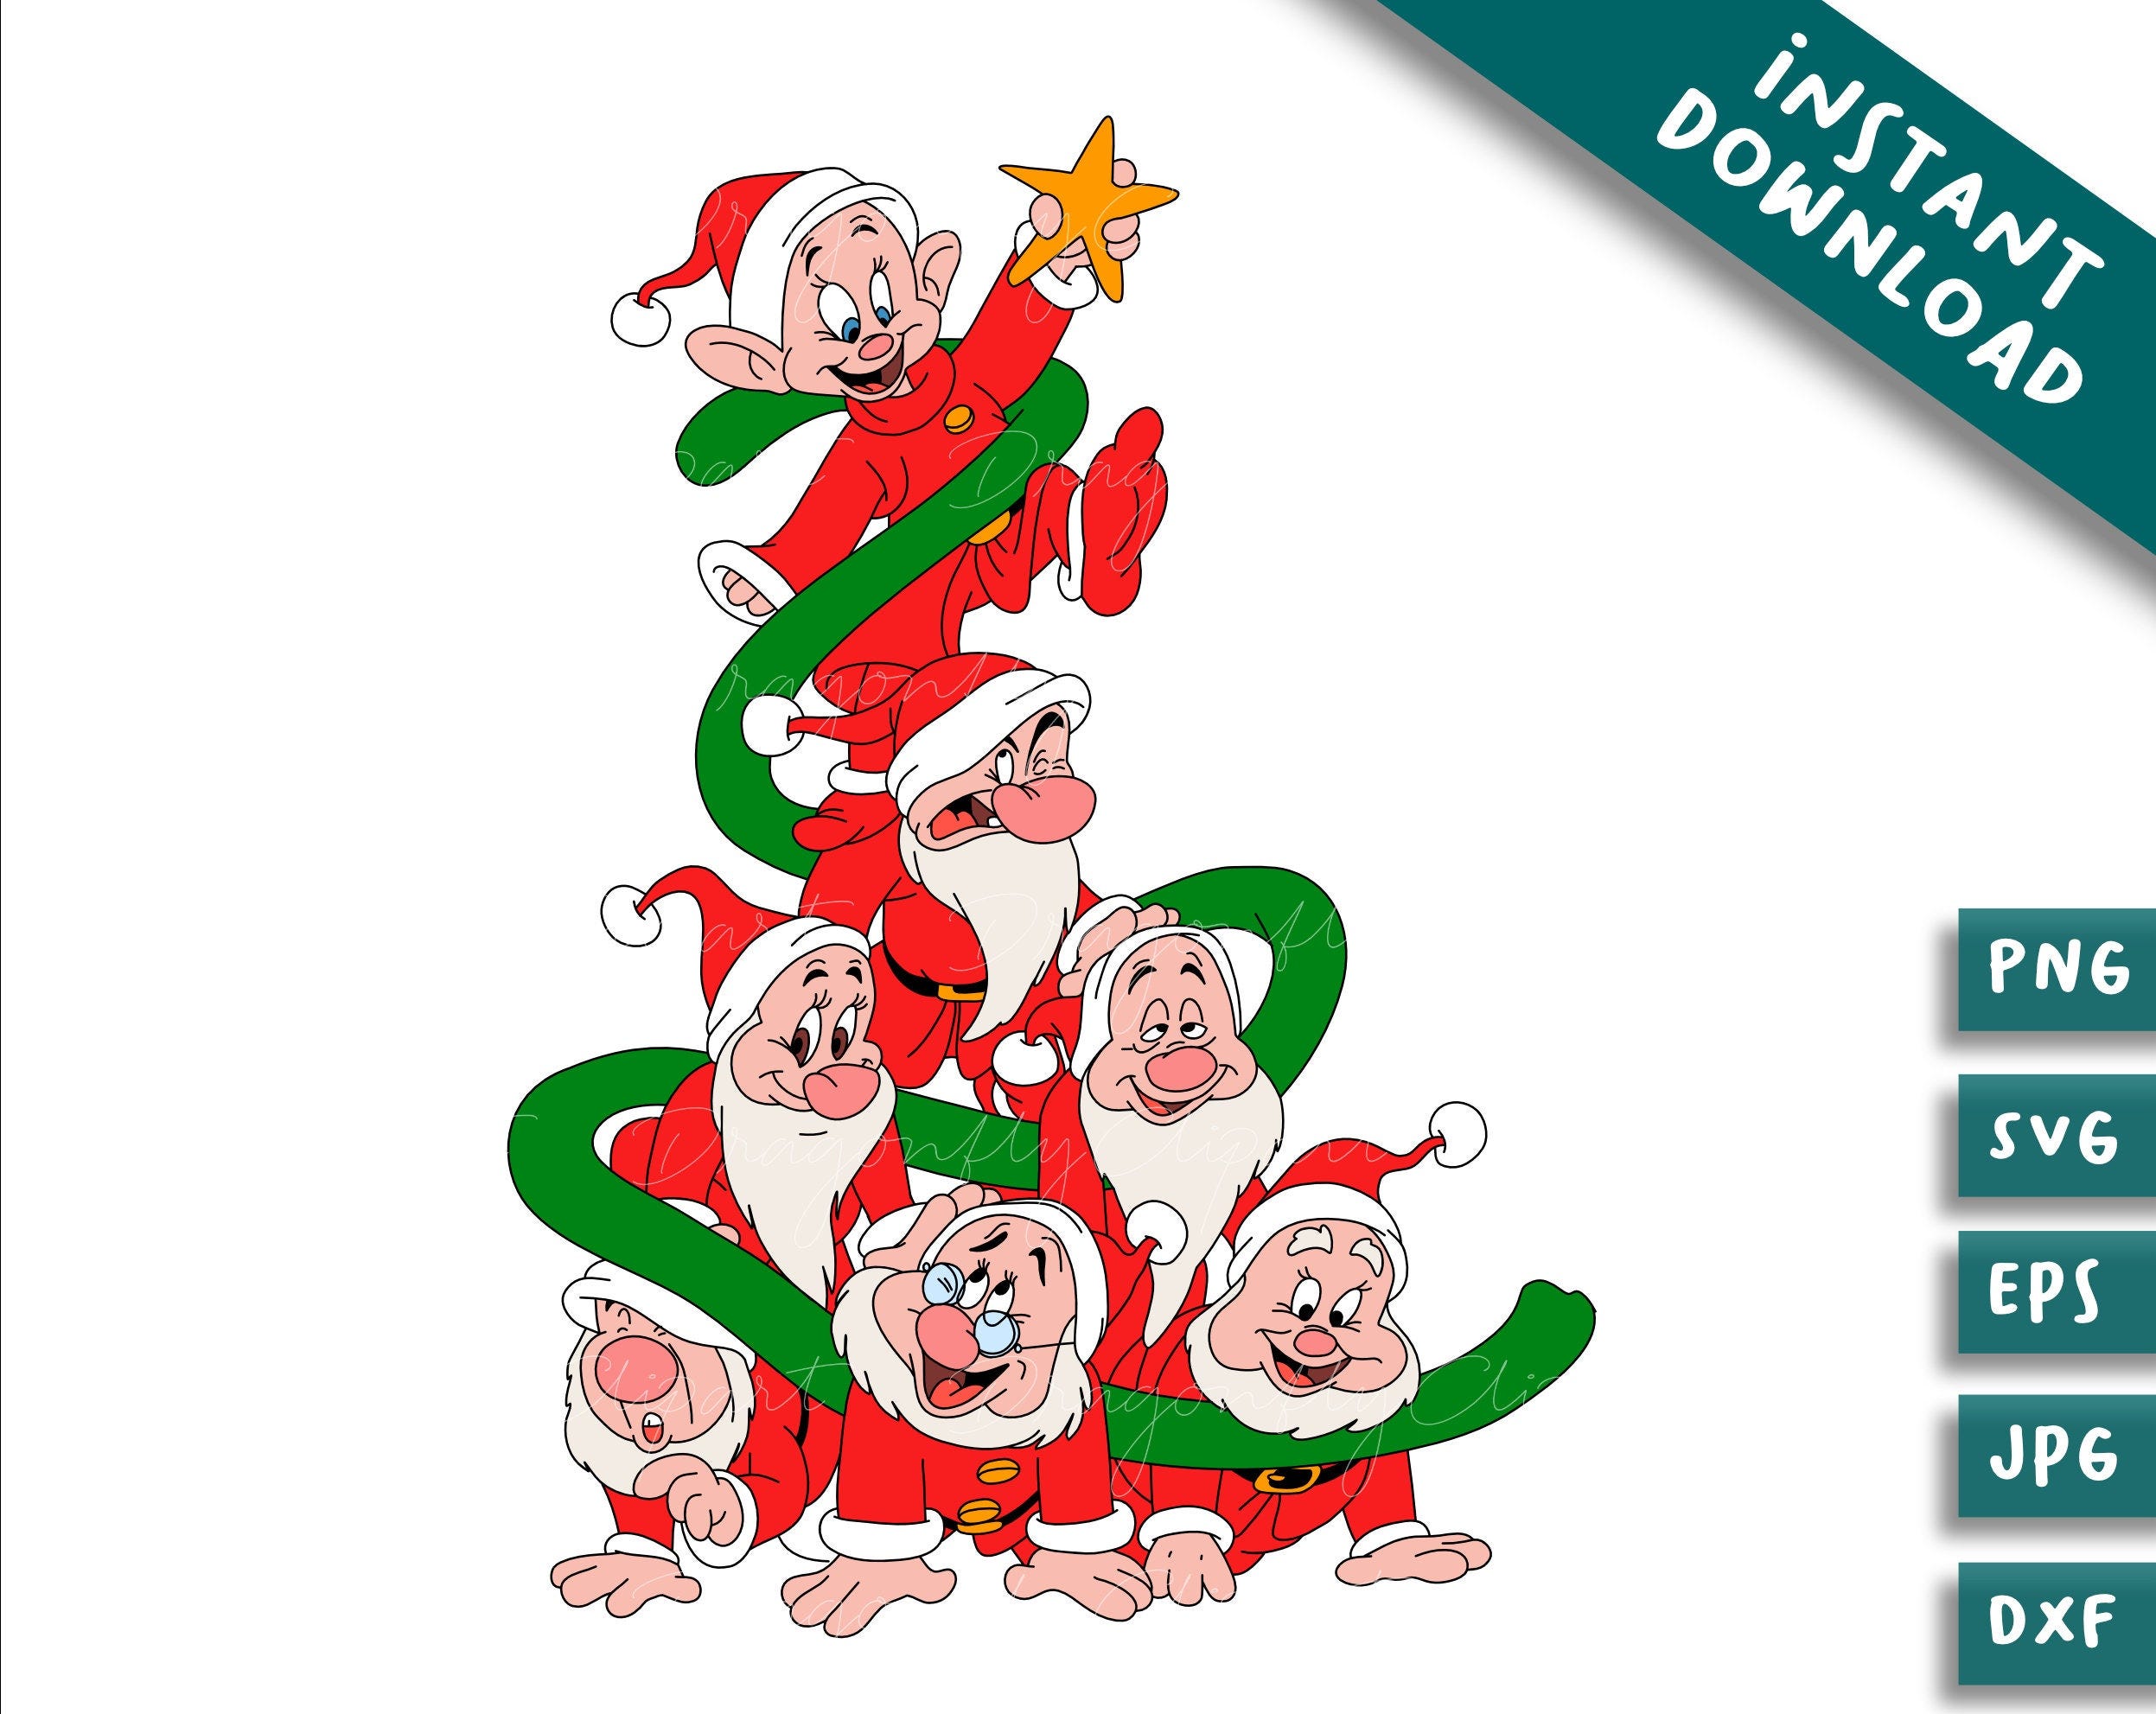 Pine 7 dwarfs christmas, Christmas Svg Png, svg cricut christmas, friend Svg, Christmas Character, Holiday Png Files, Cricut Sublimation